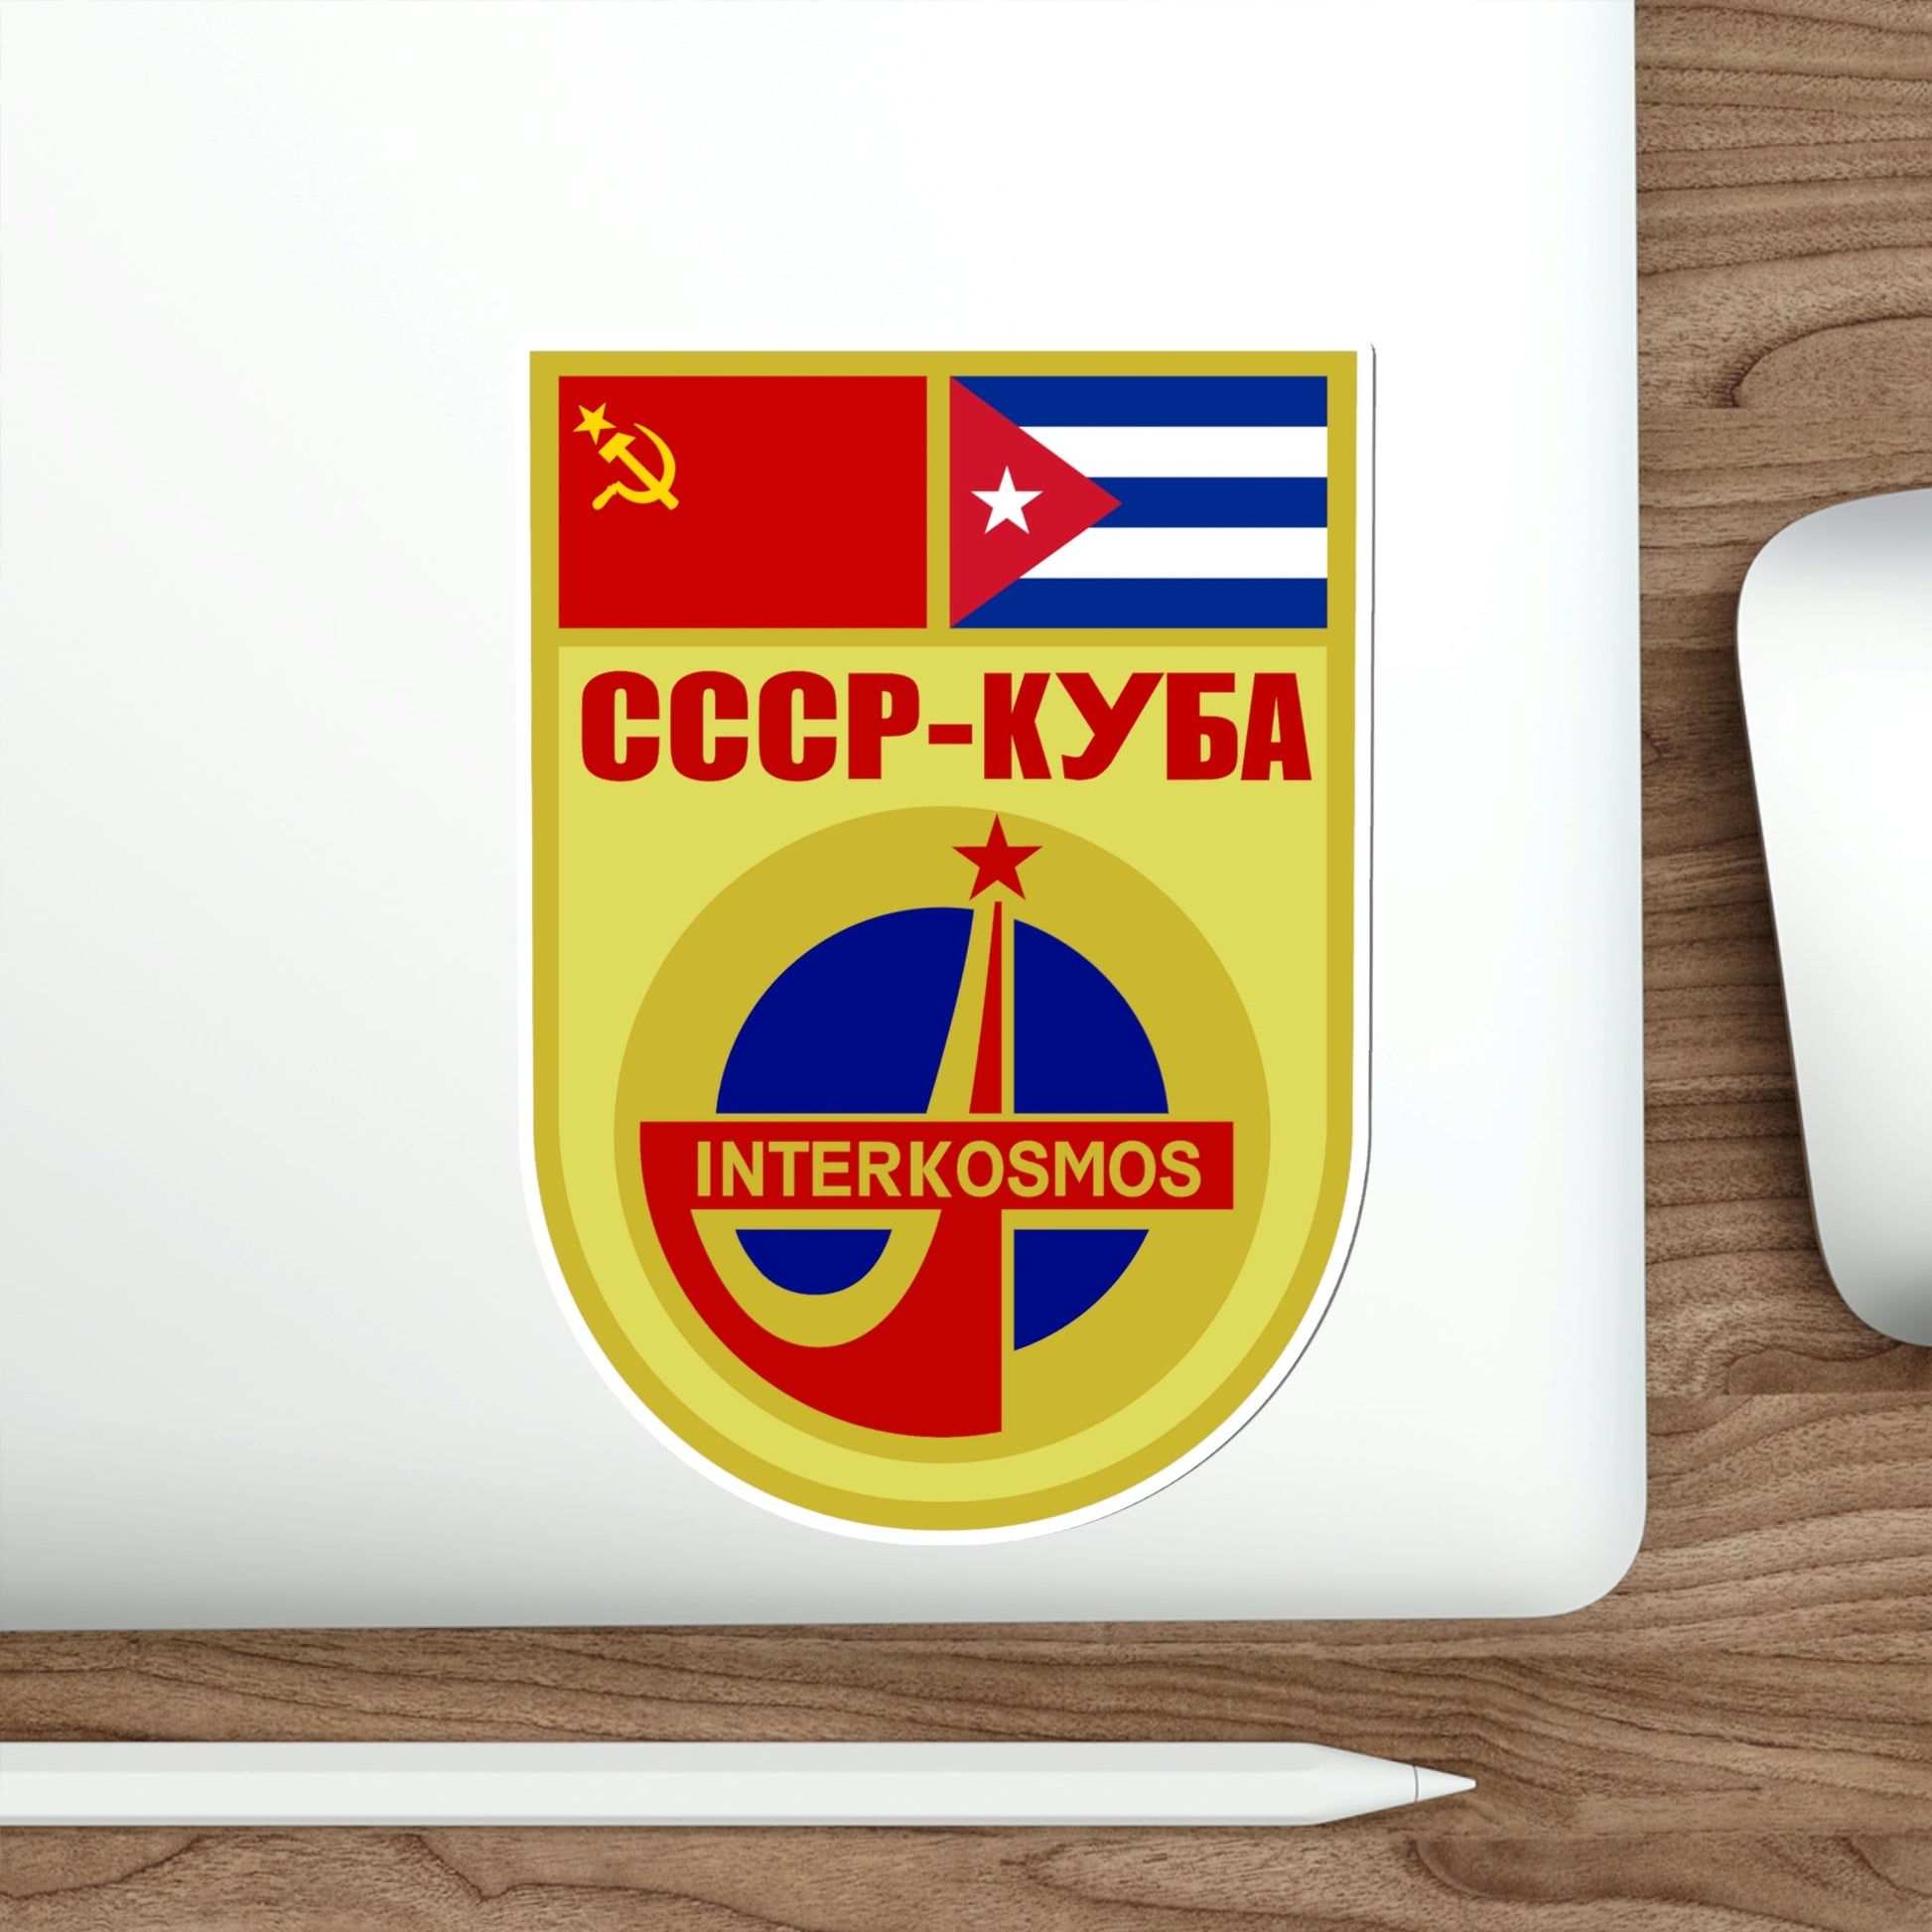 soviet space program symbol